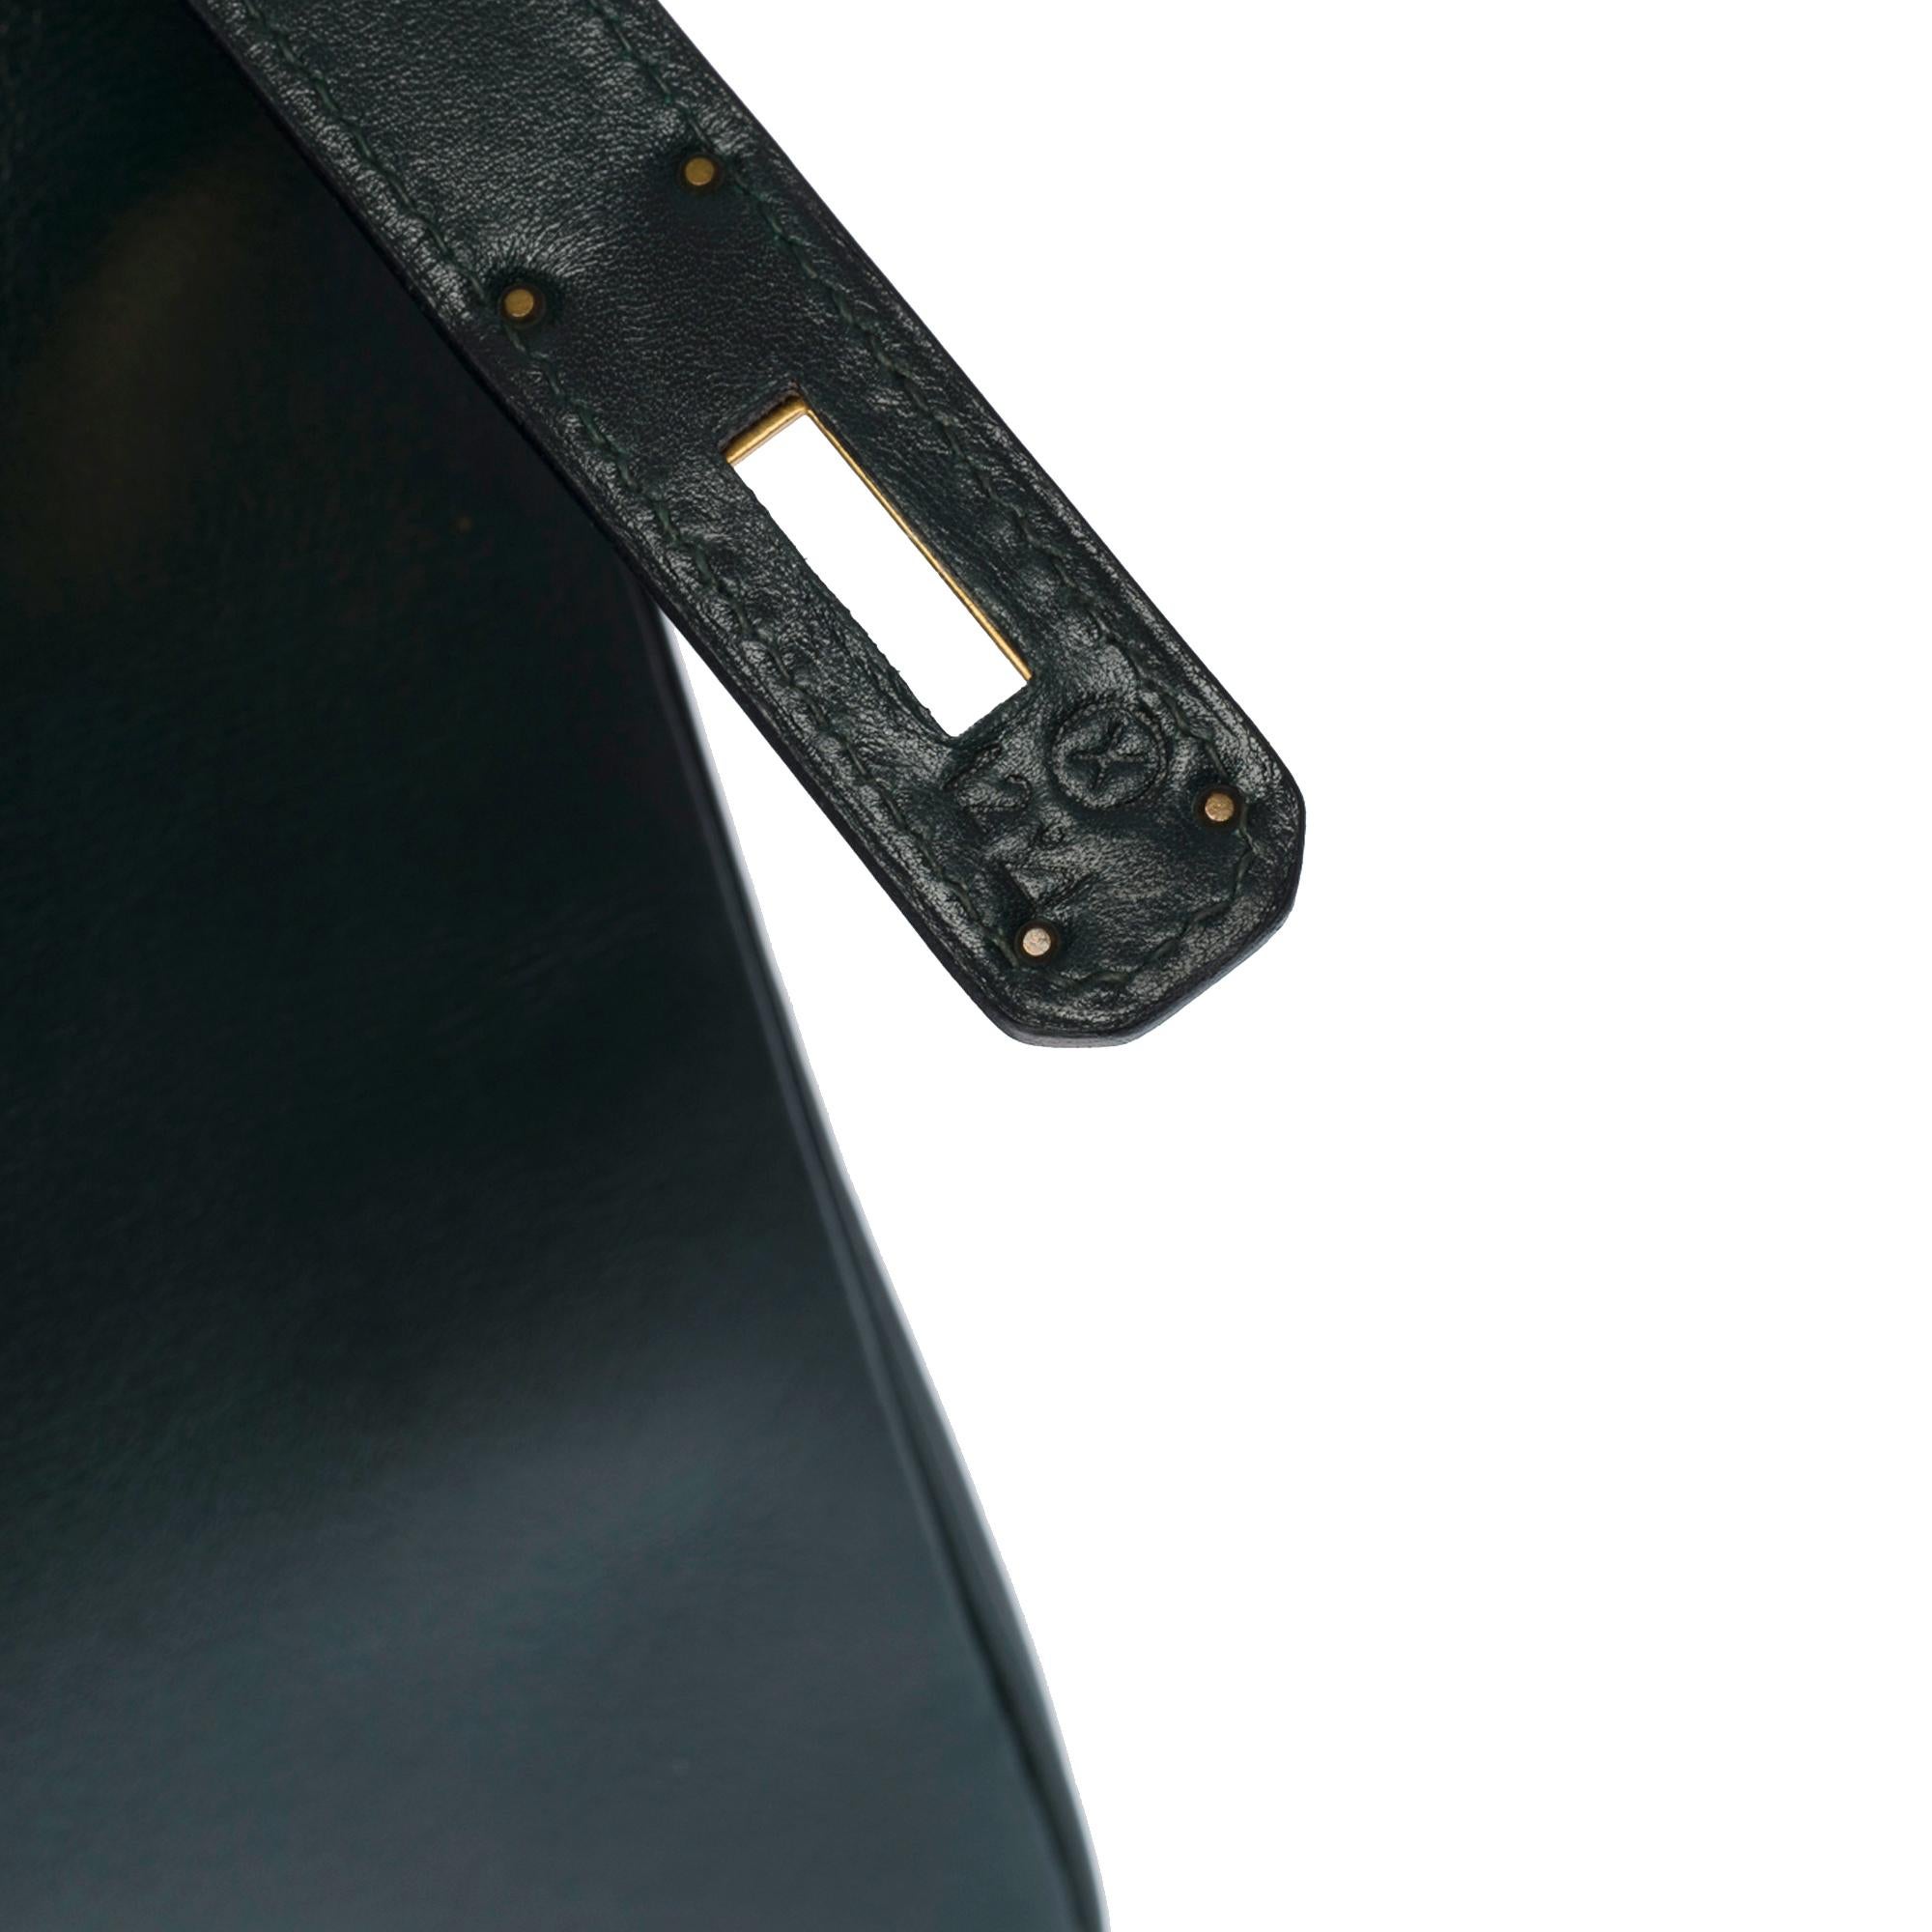 Rare Hermès Kelly 28 retourne handbag strap in green box calf leather, GHW 2